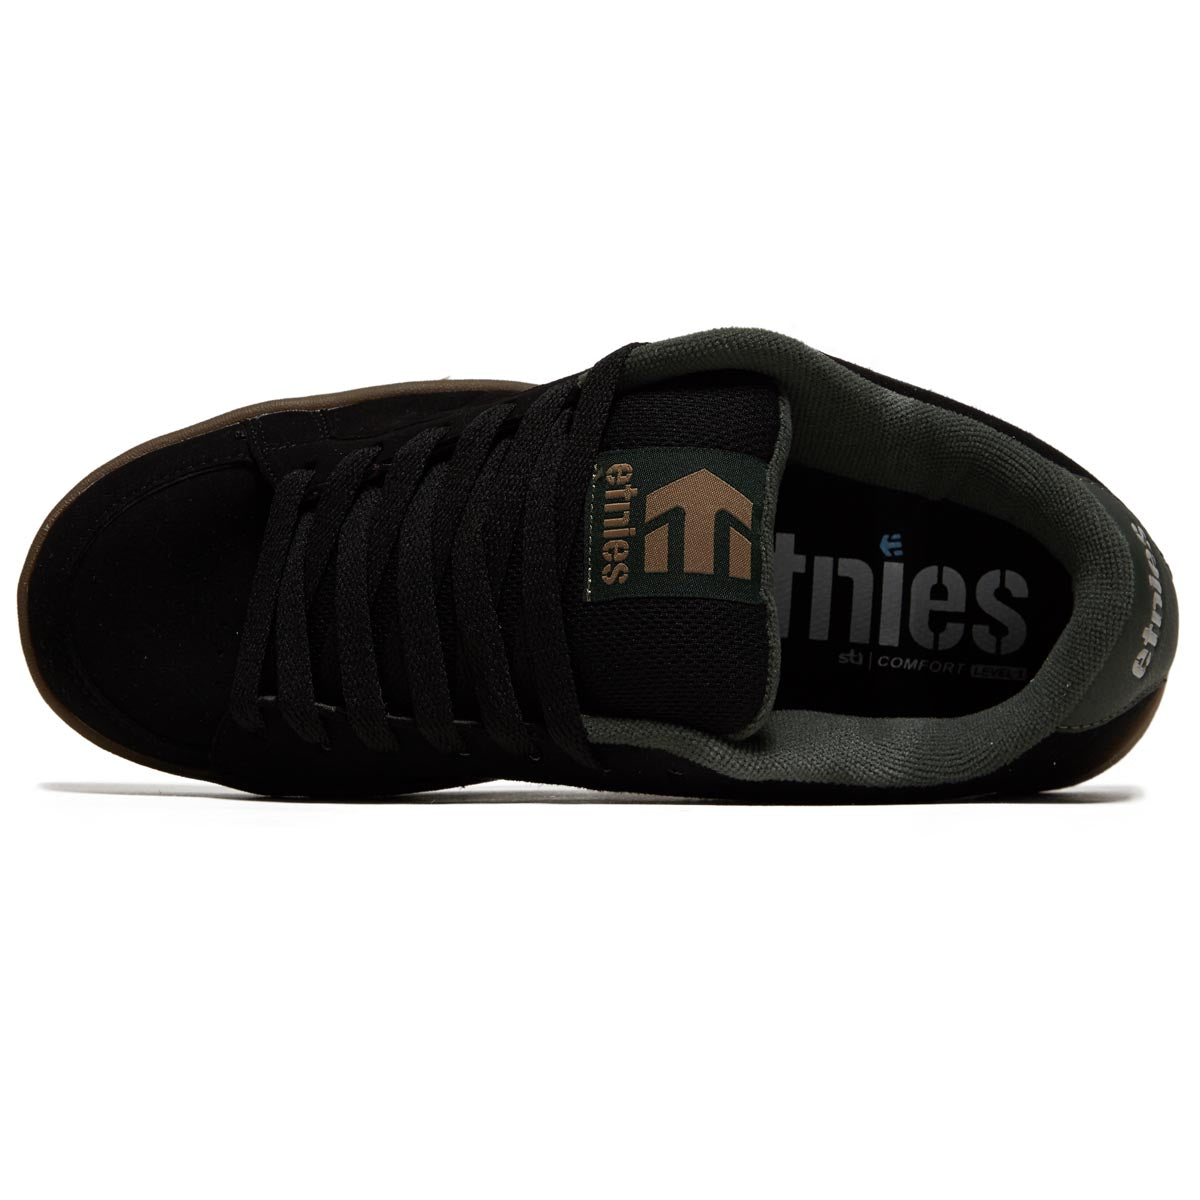 Etnies Kingpin Shoes - Black/Green/Gum image 3